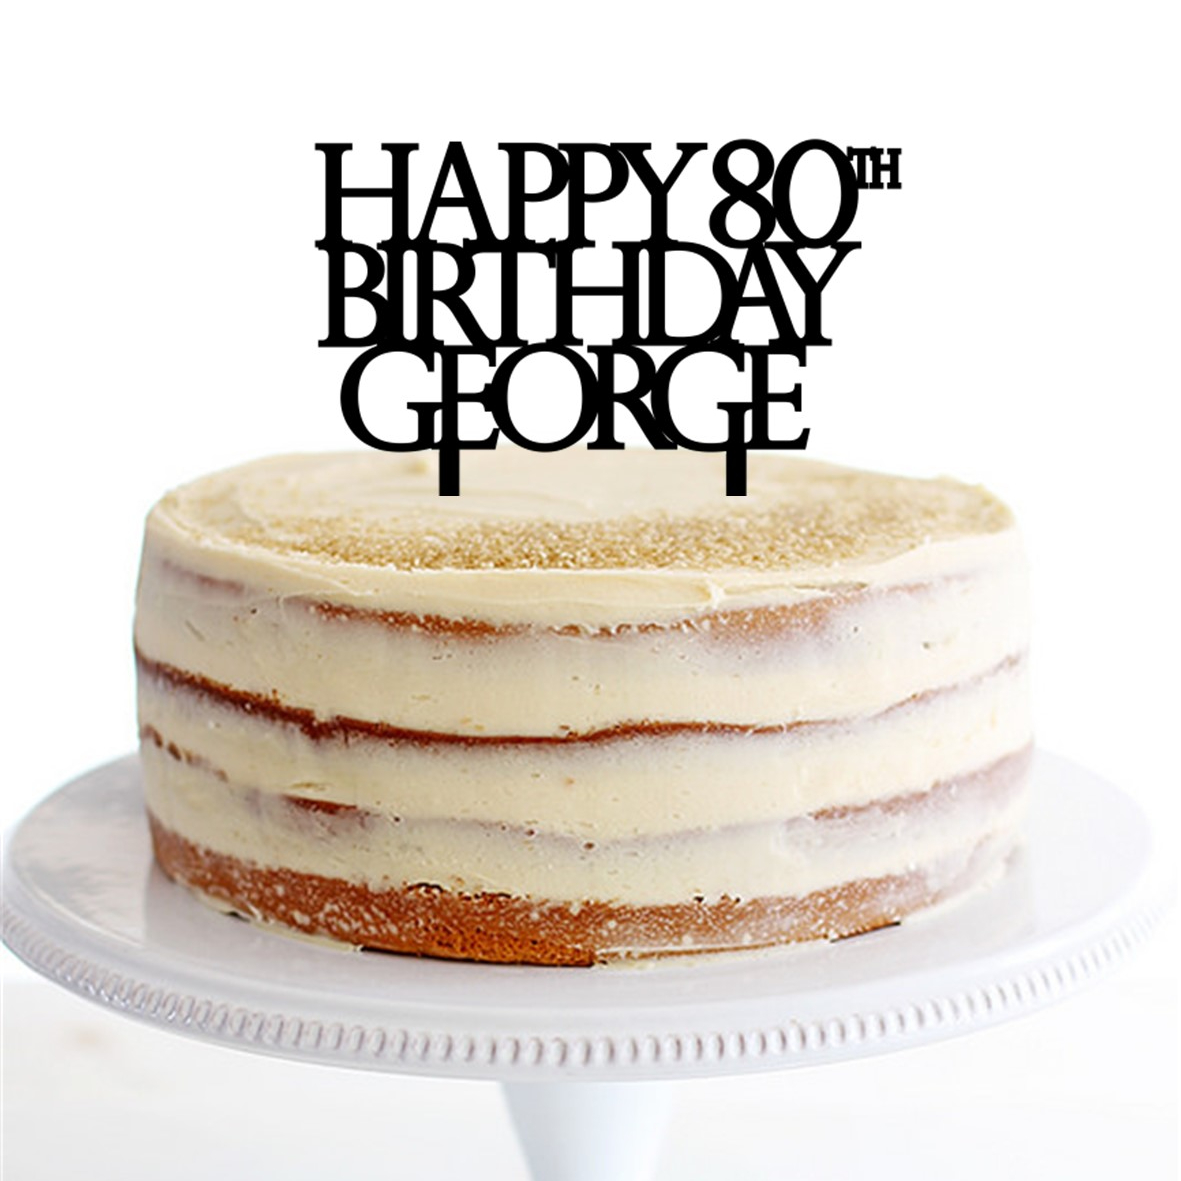 Top 80 Birthday cake decorating ideas|70th+ Birthday cake ideas| Cake design  image ideas|Nlewam Oluc - YouTube